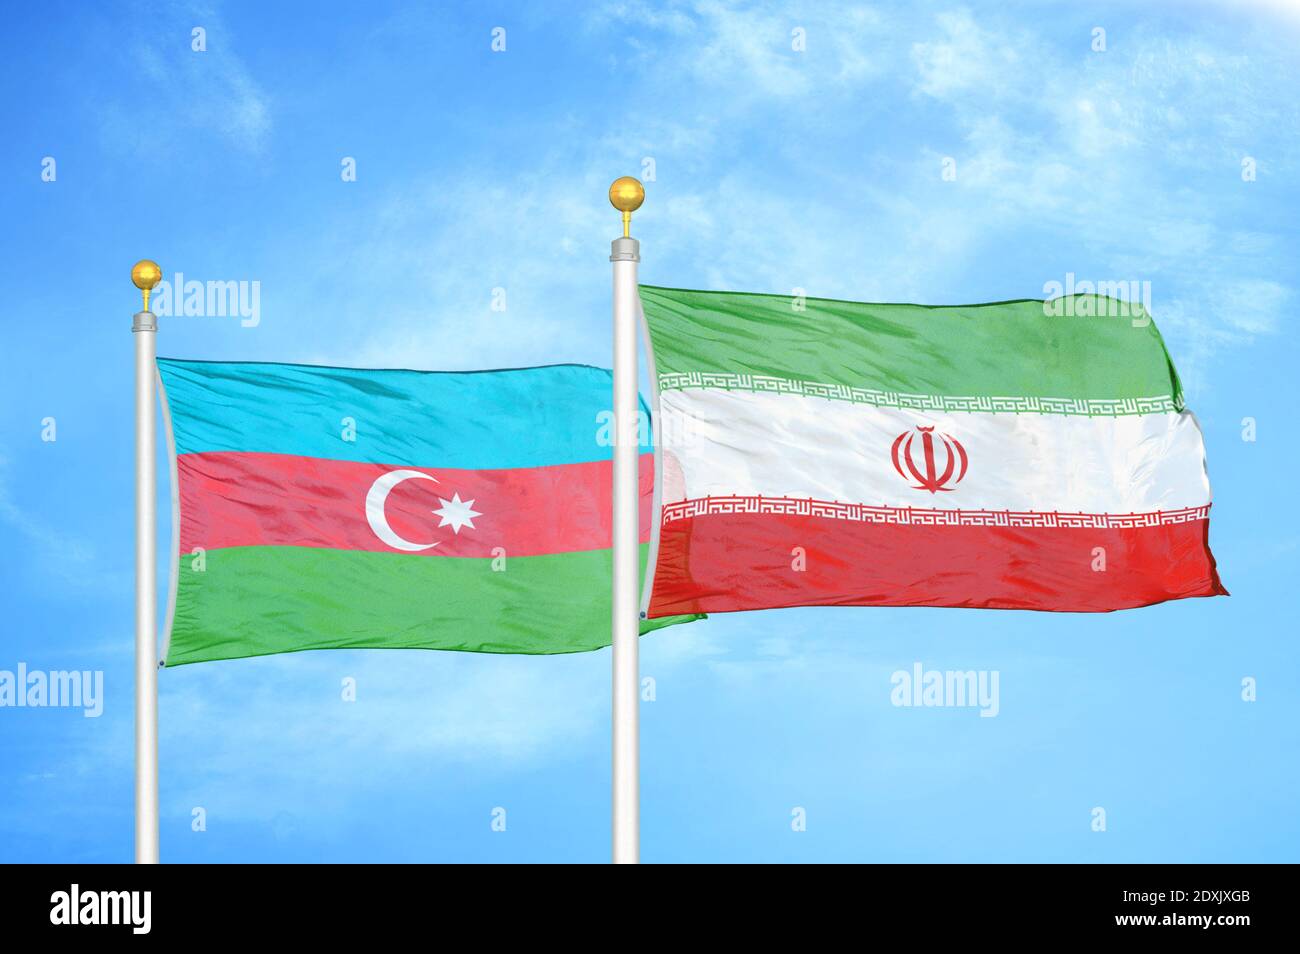 8 neue Flaggen Aserbaidschan, Iran, USA, Mexiko, Kanada, Brasilien,  Australien, Neuseeland je 8,5 x 5,5 cm